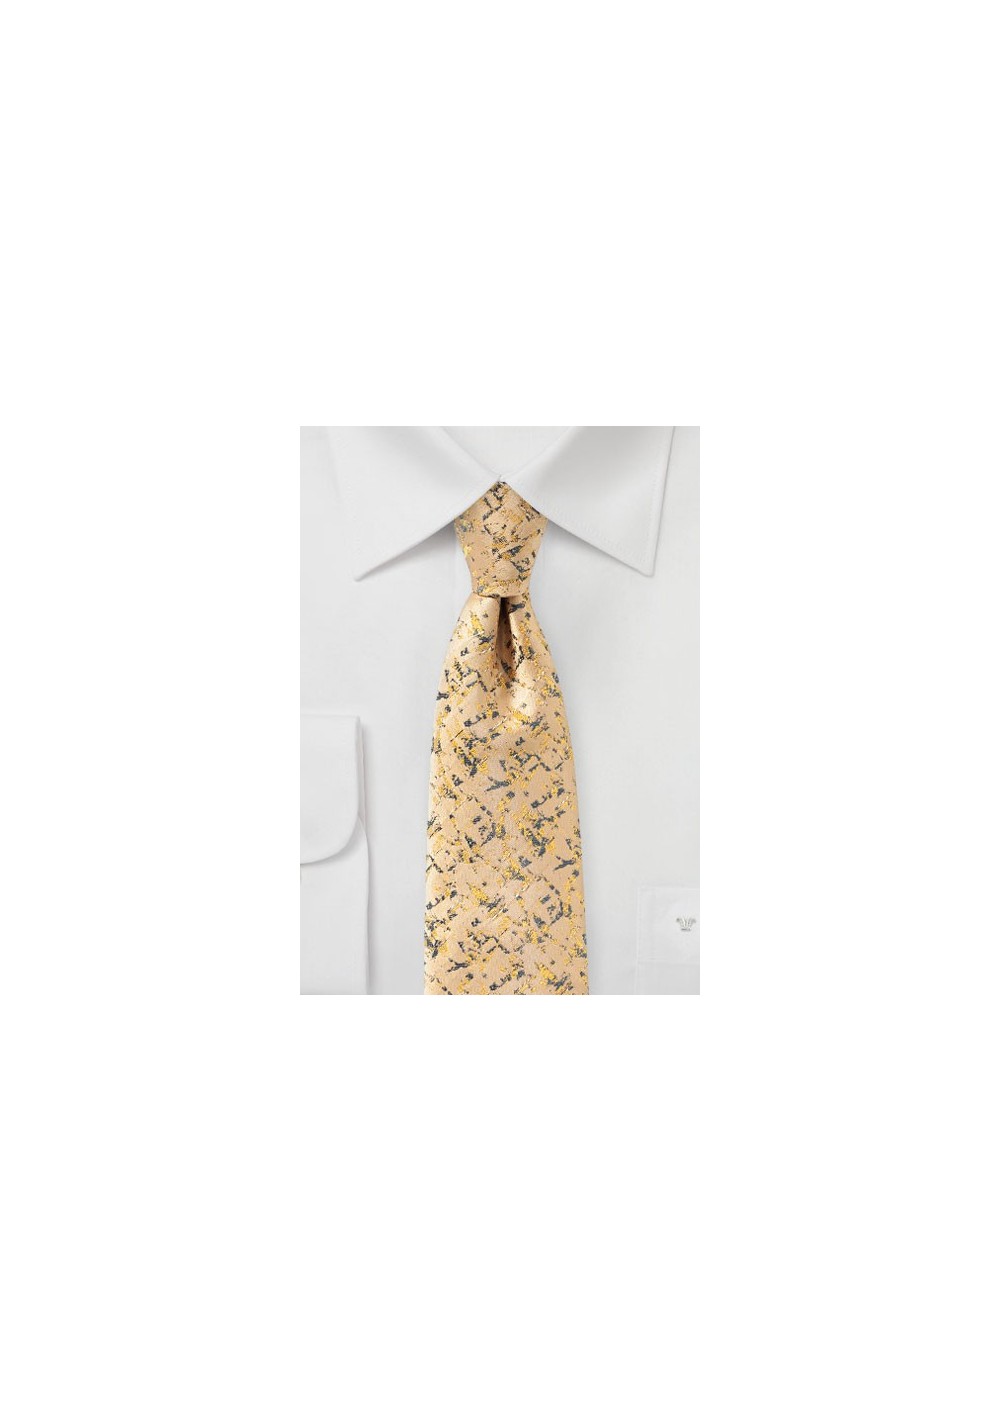 Golden Yellow and Gray Designer Tie